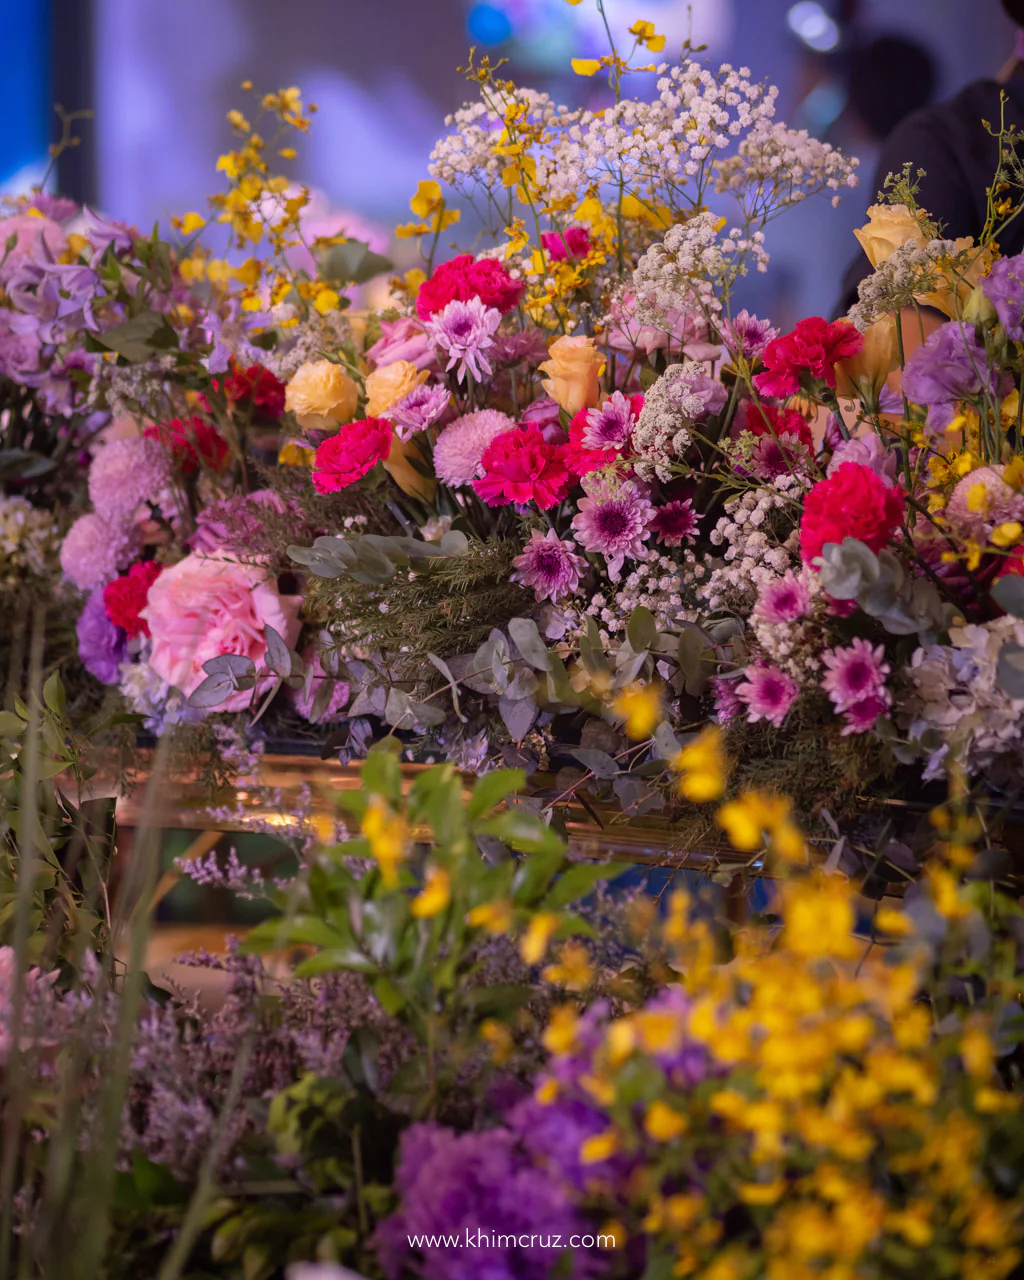 disney enchanted movie inspired 18th birthday debut spring flowers of Central Park by Khim Cruz